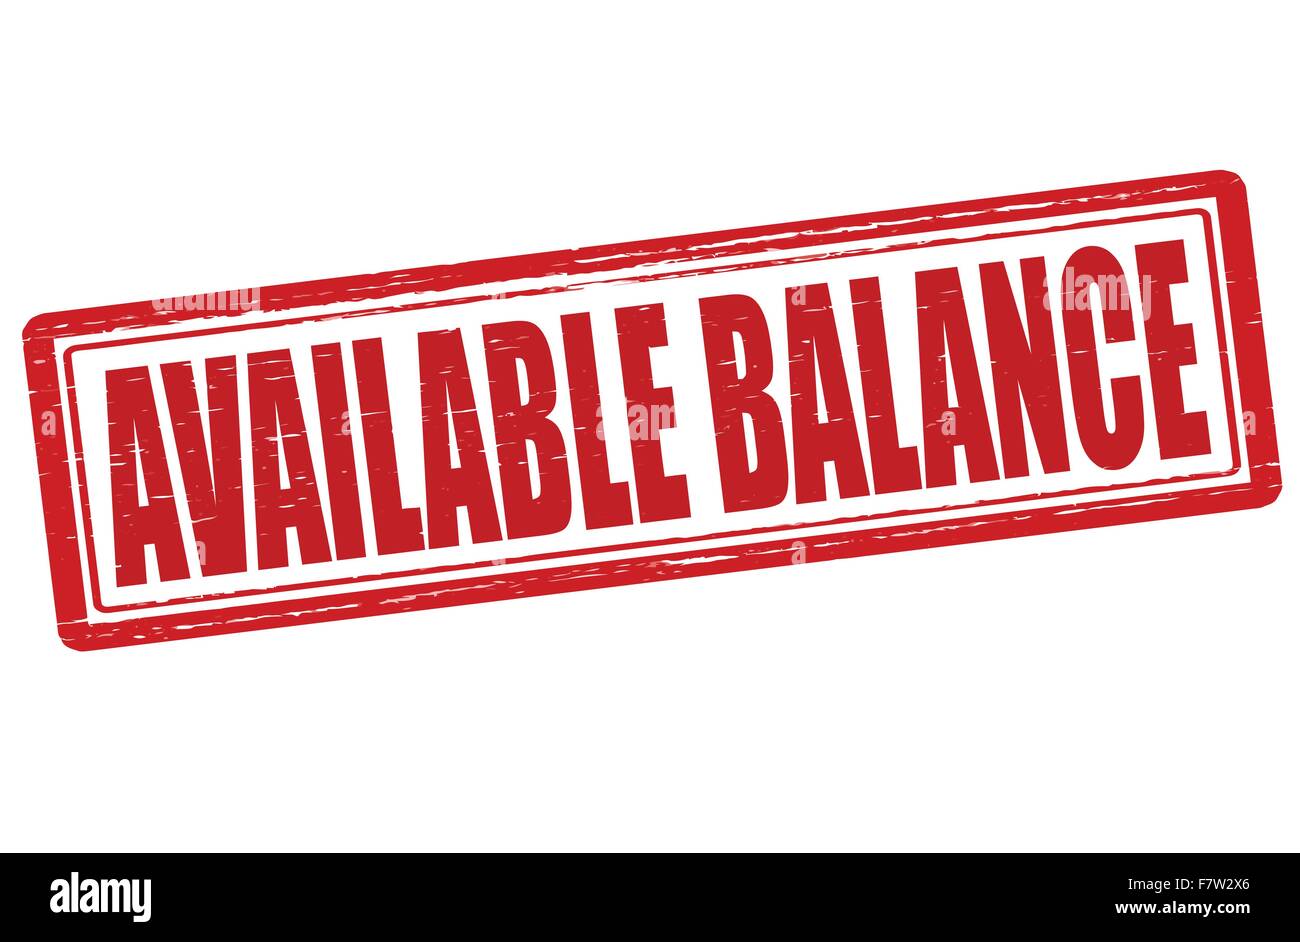 Available balance Stock Vector